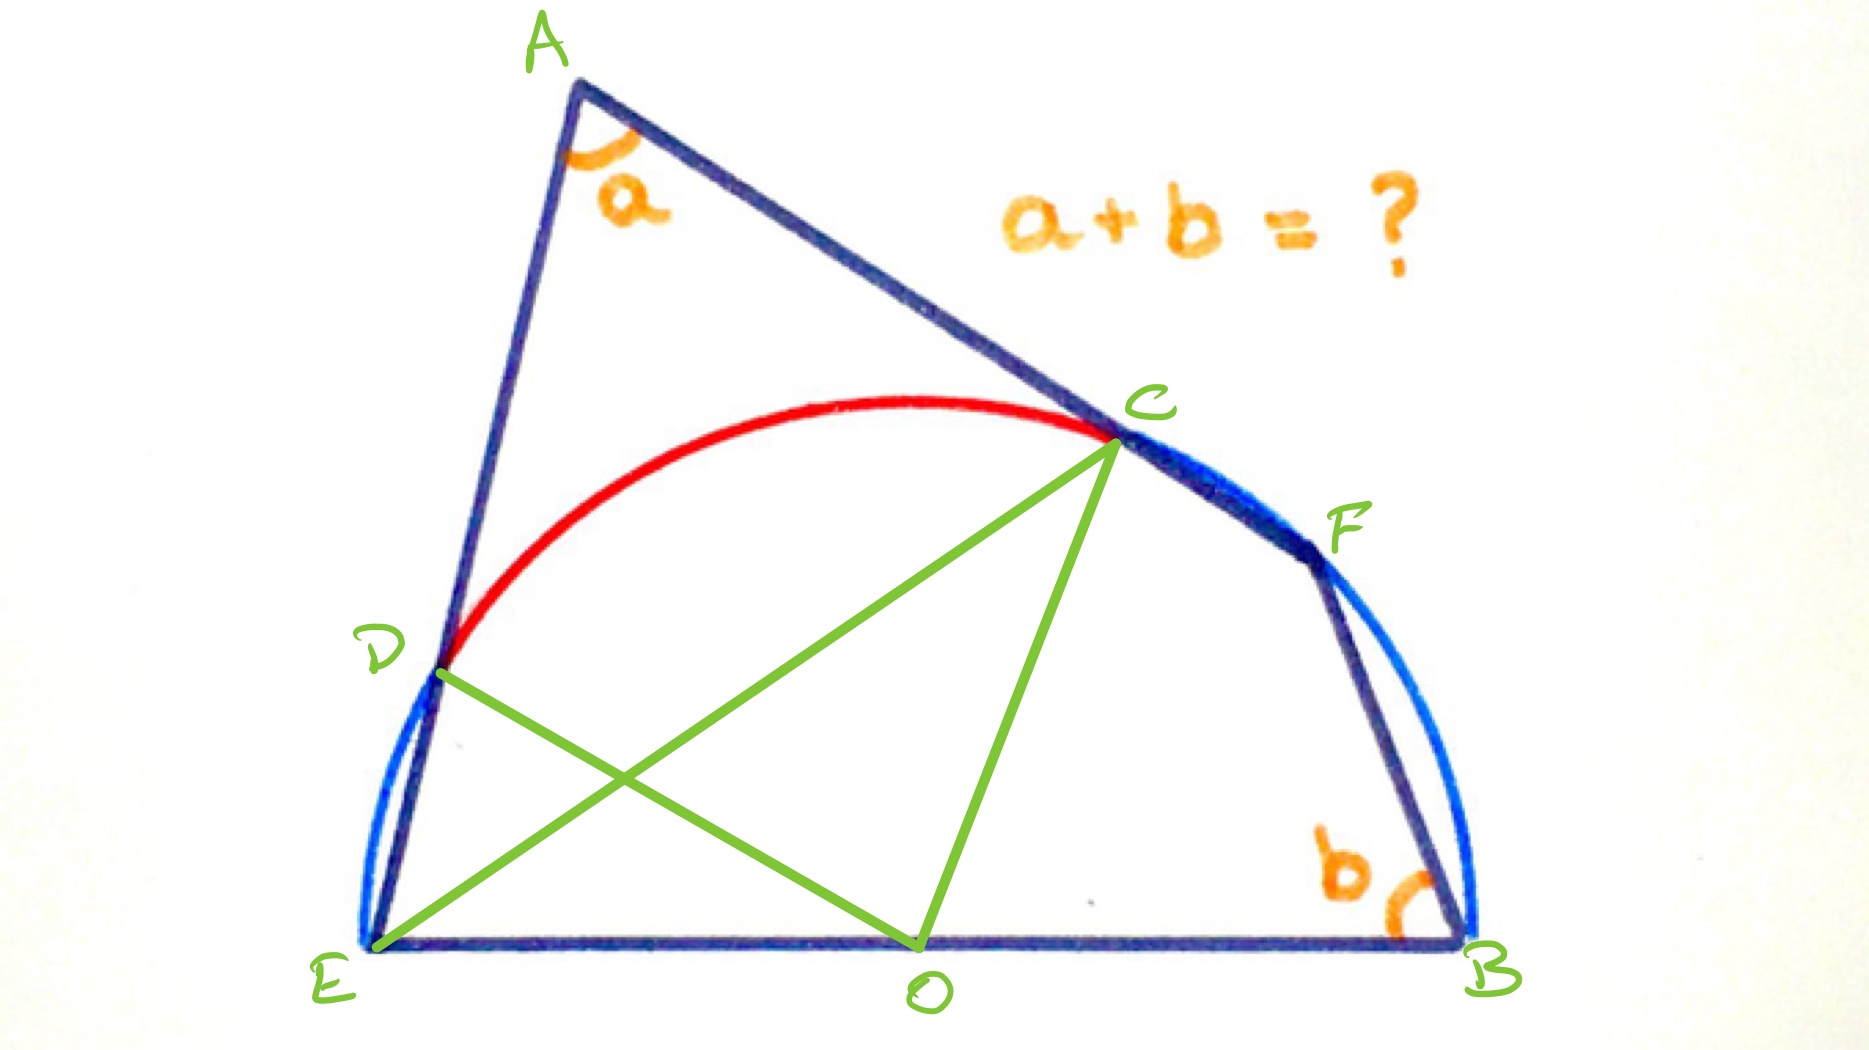 Quadrilateral splitting a semi-circle labelled